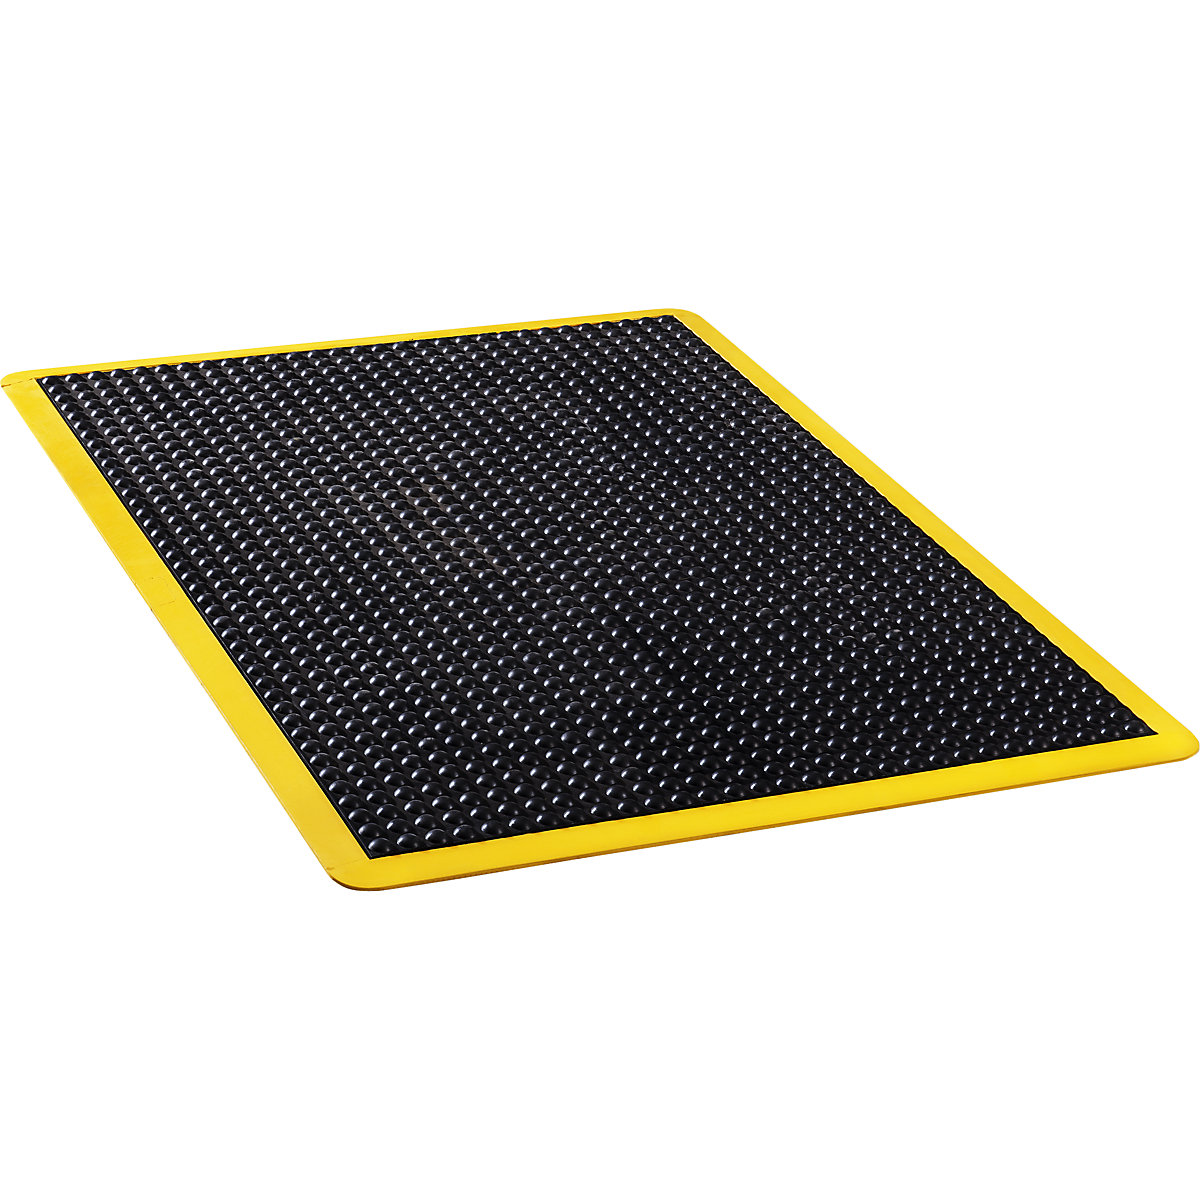 Bubblemat safety anti-fatigue matting – COBA, LxWxH 900 x 600 x 14 mm, yellow-black, single mat-4